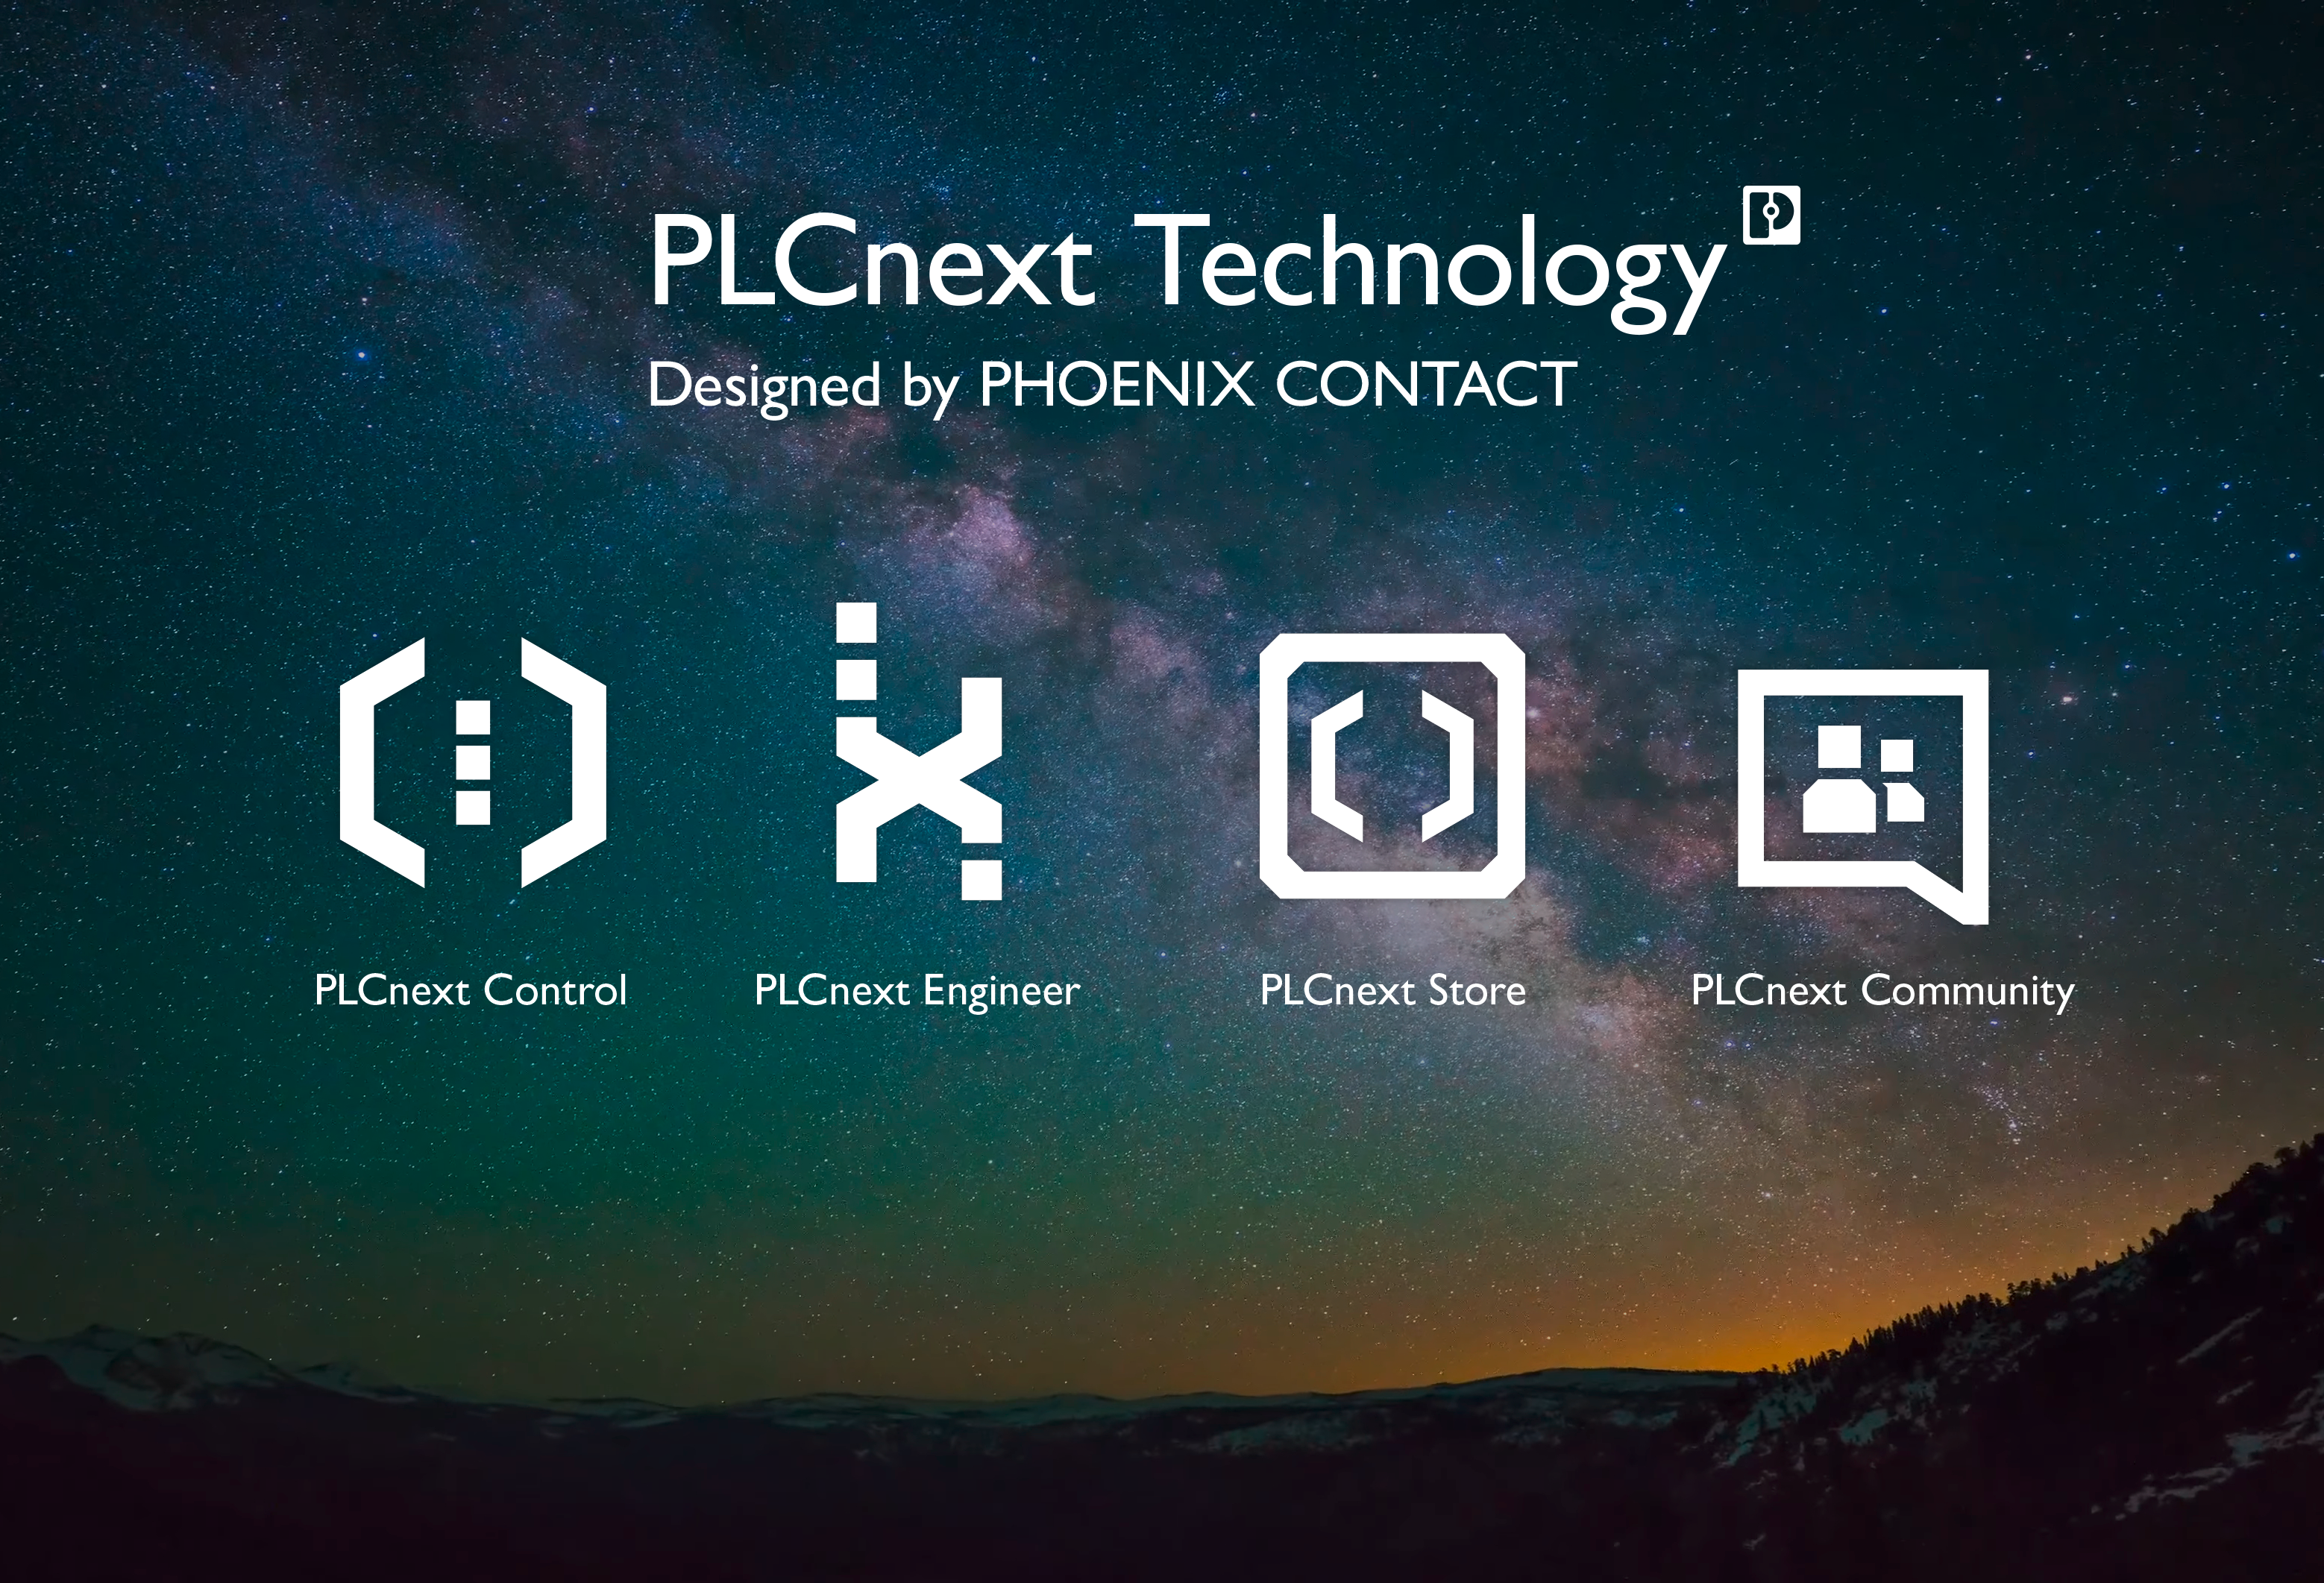 PLCnext Technology